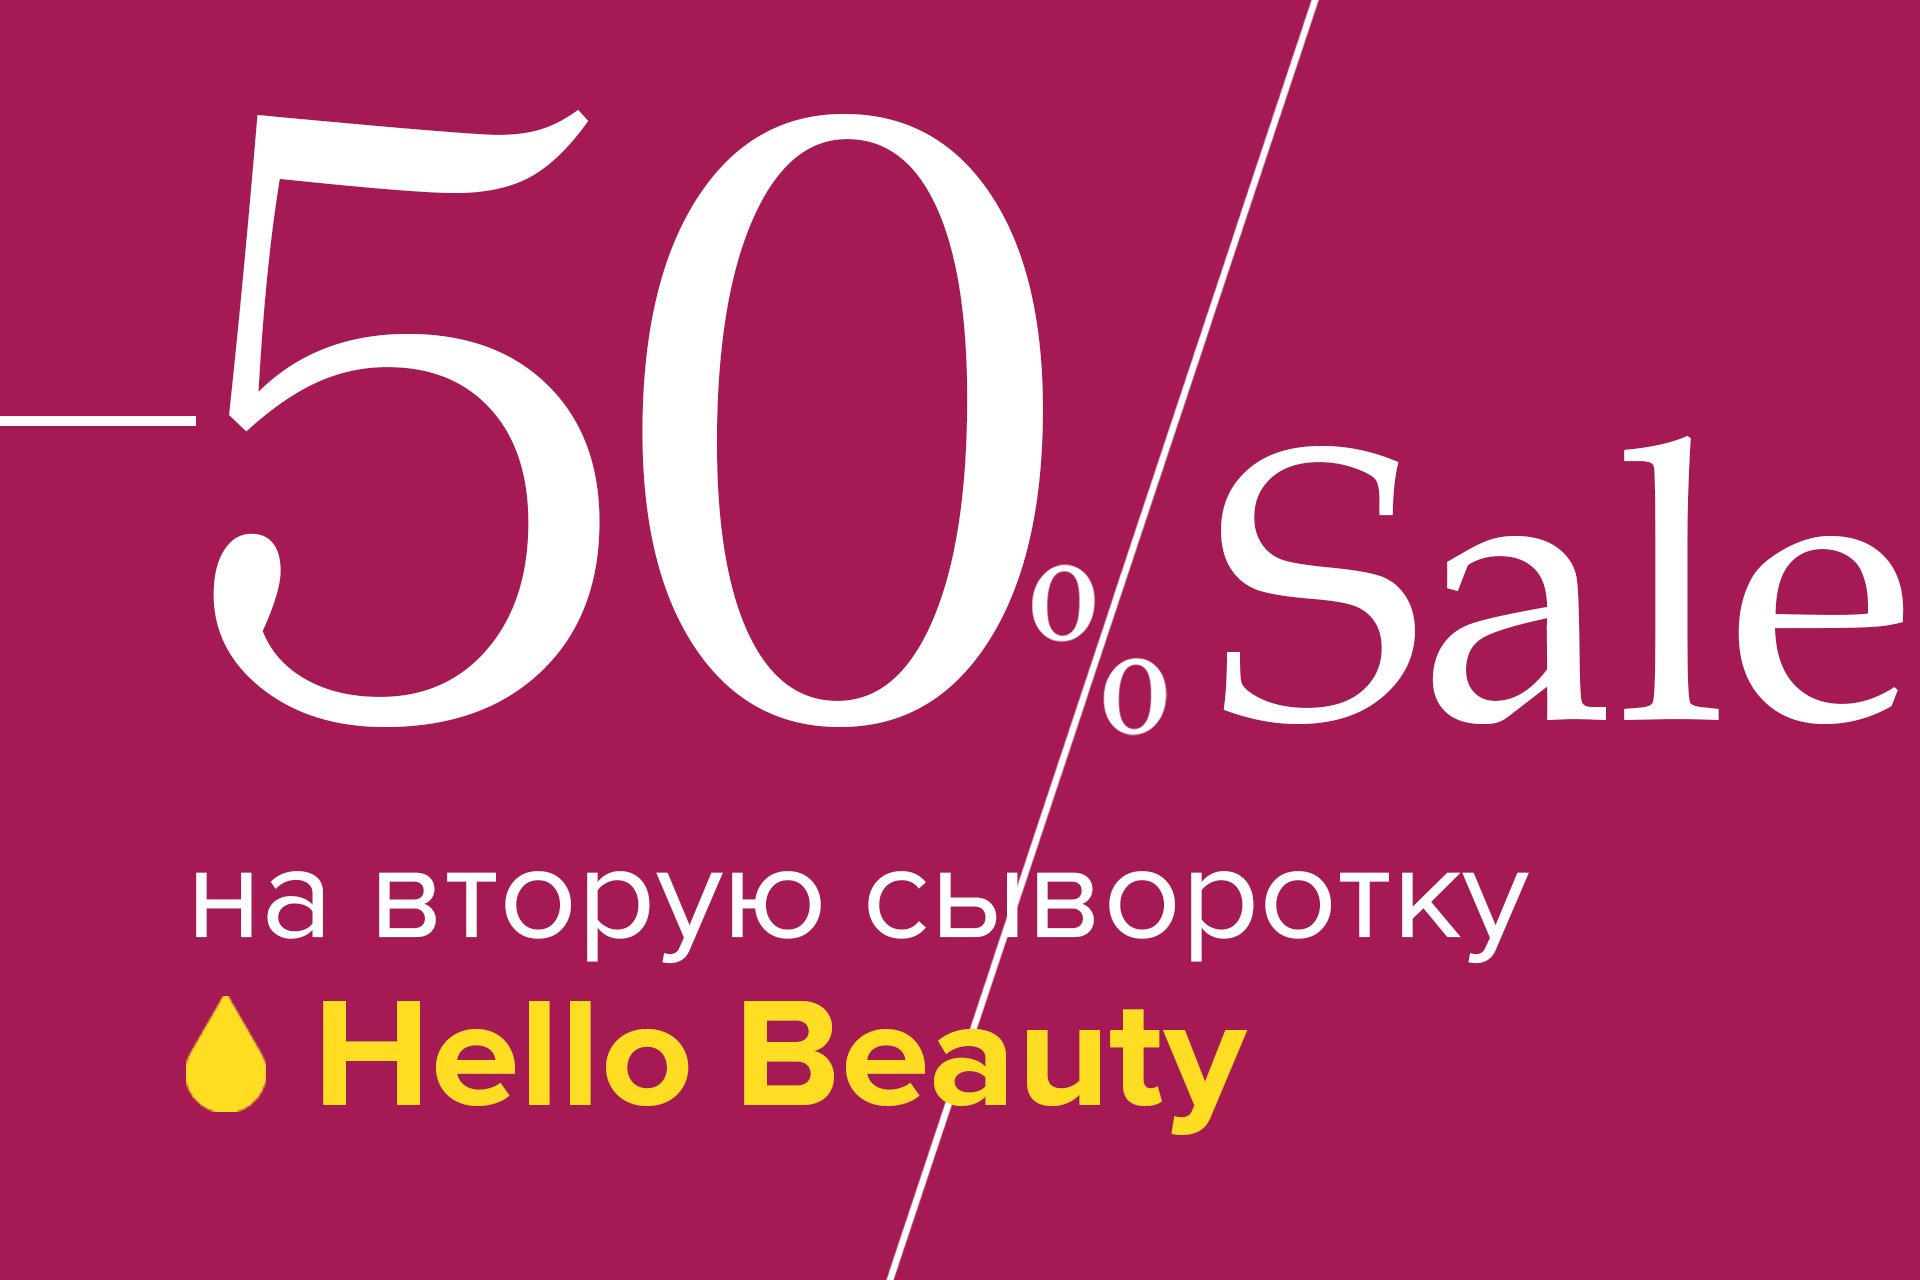 hello_beauty_50_sale.jpg